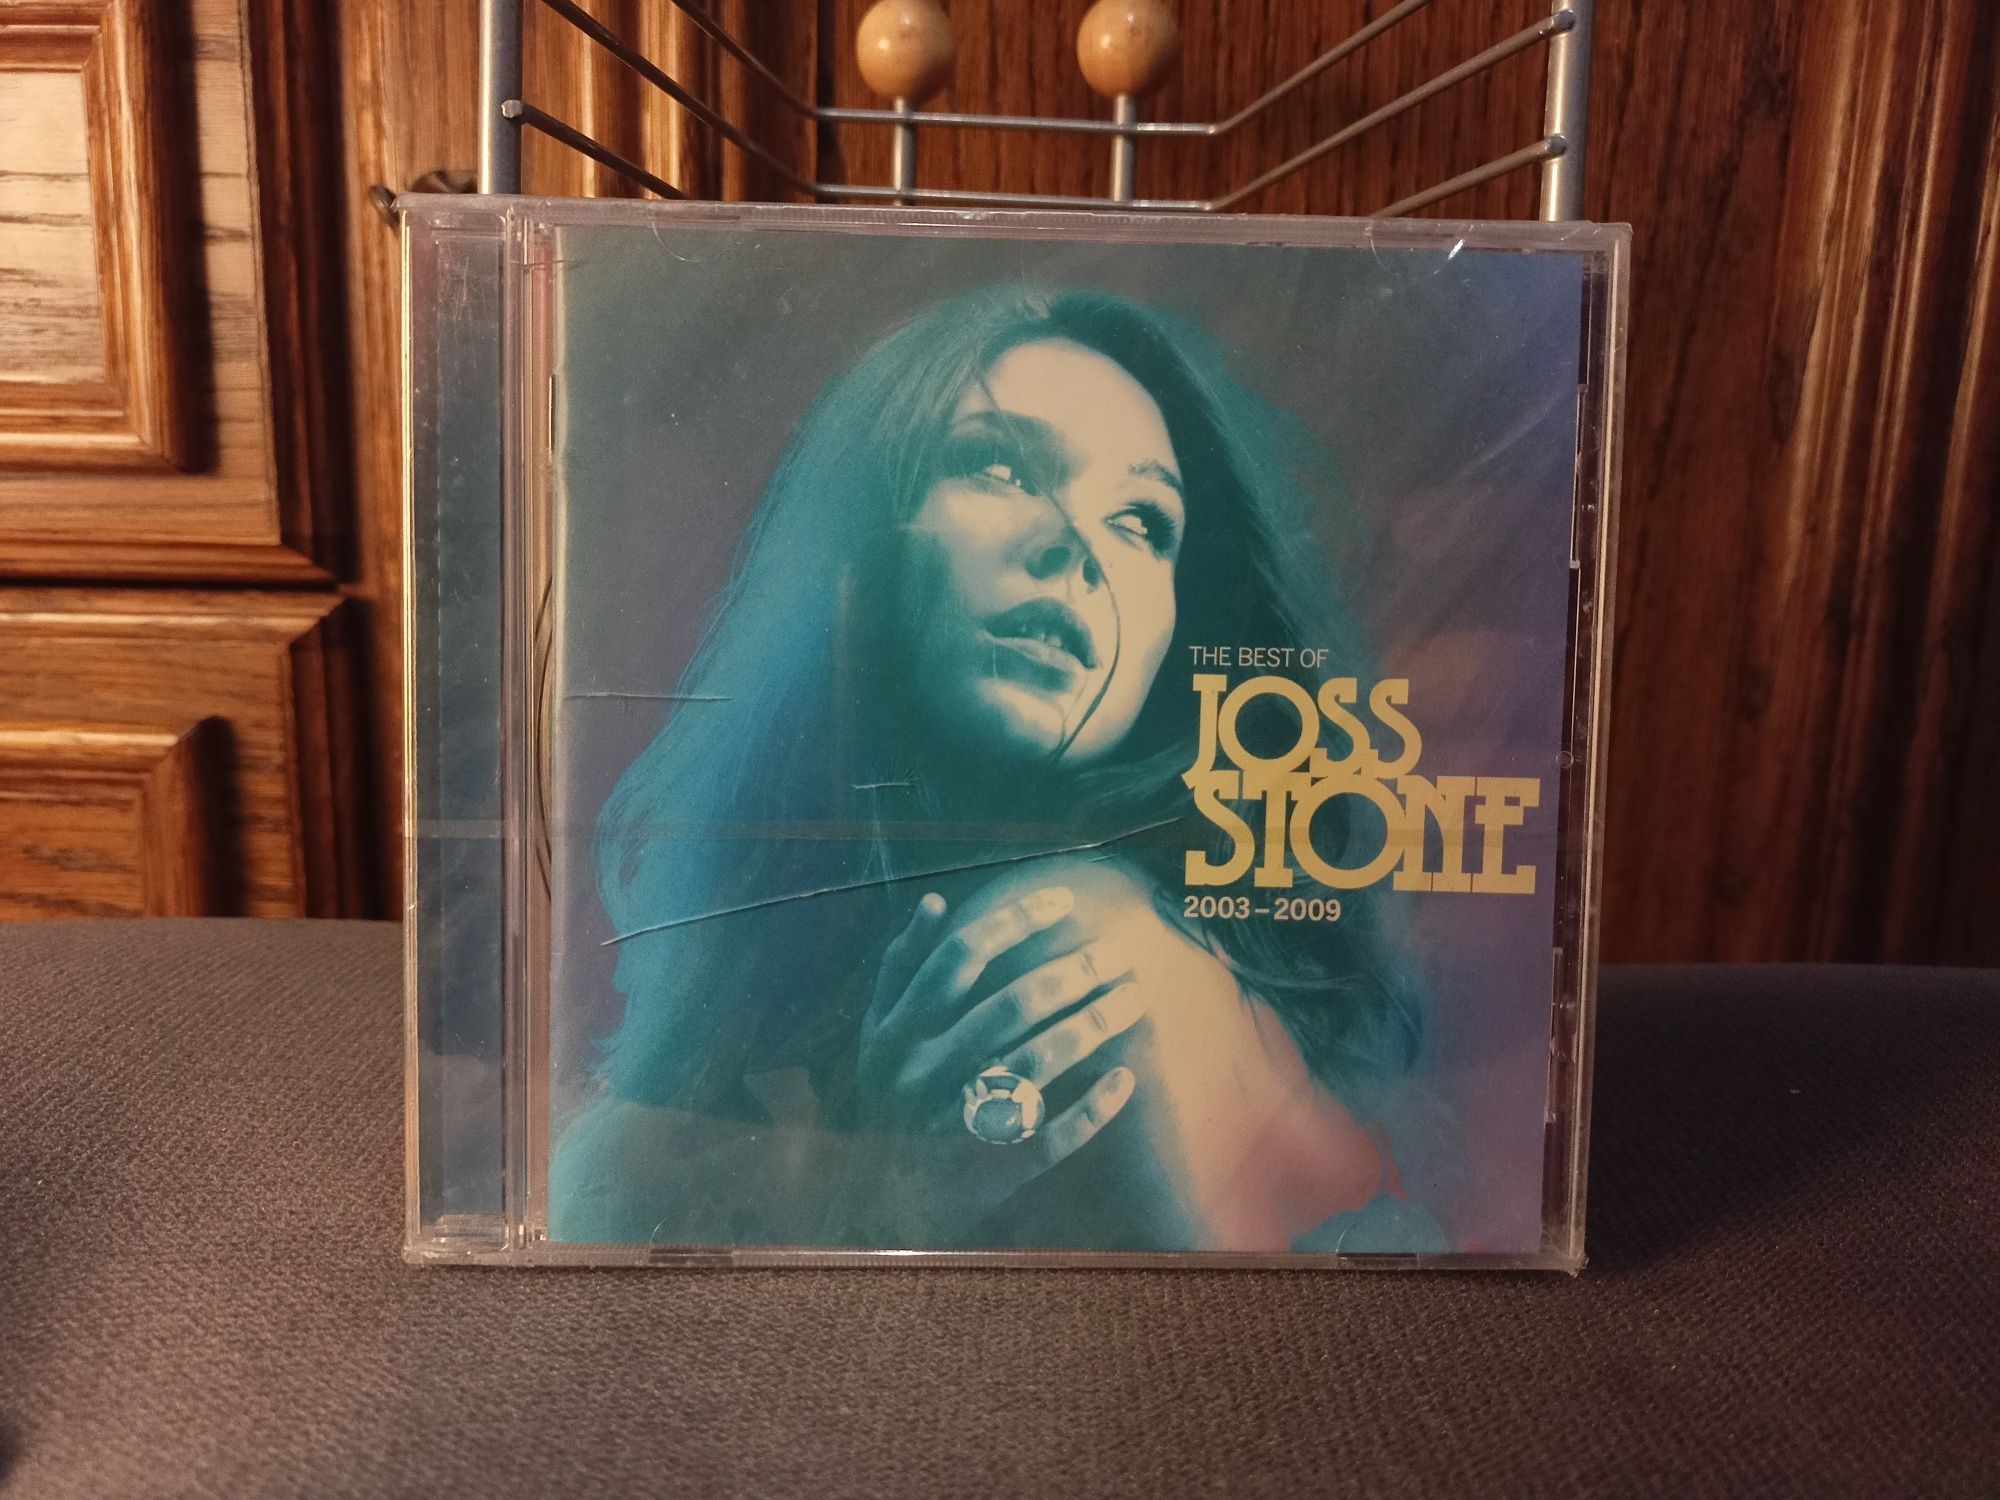 Joss Stone - The best of 2003 - 2009 CD